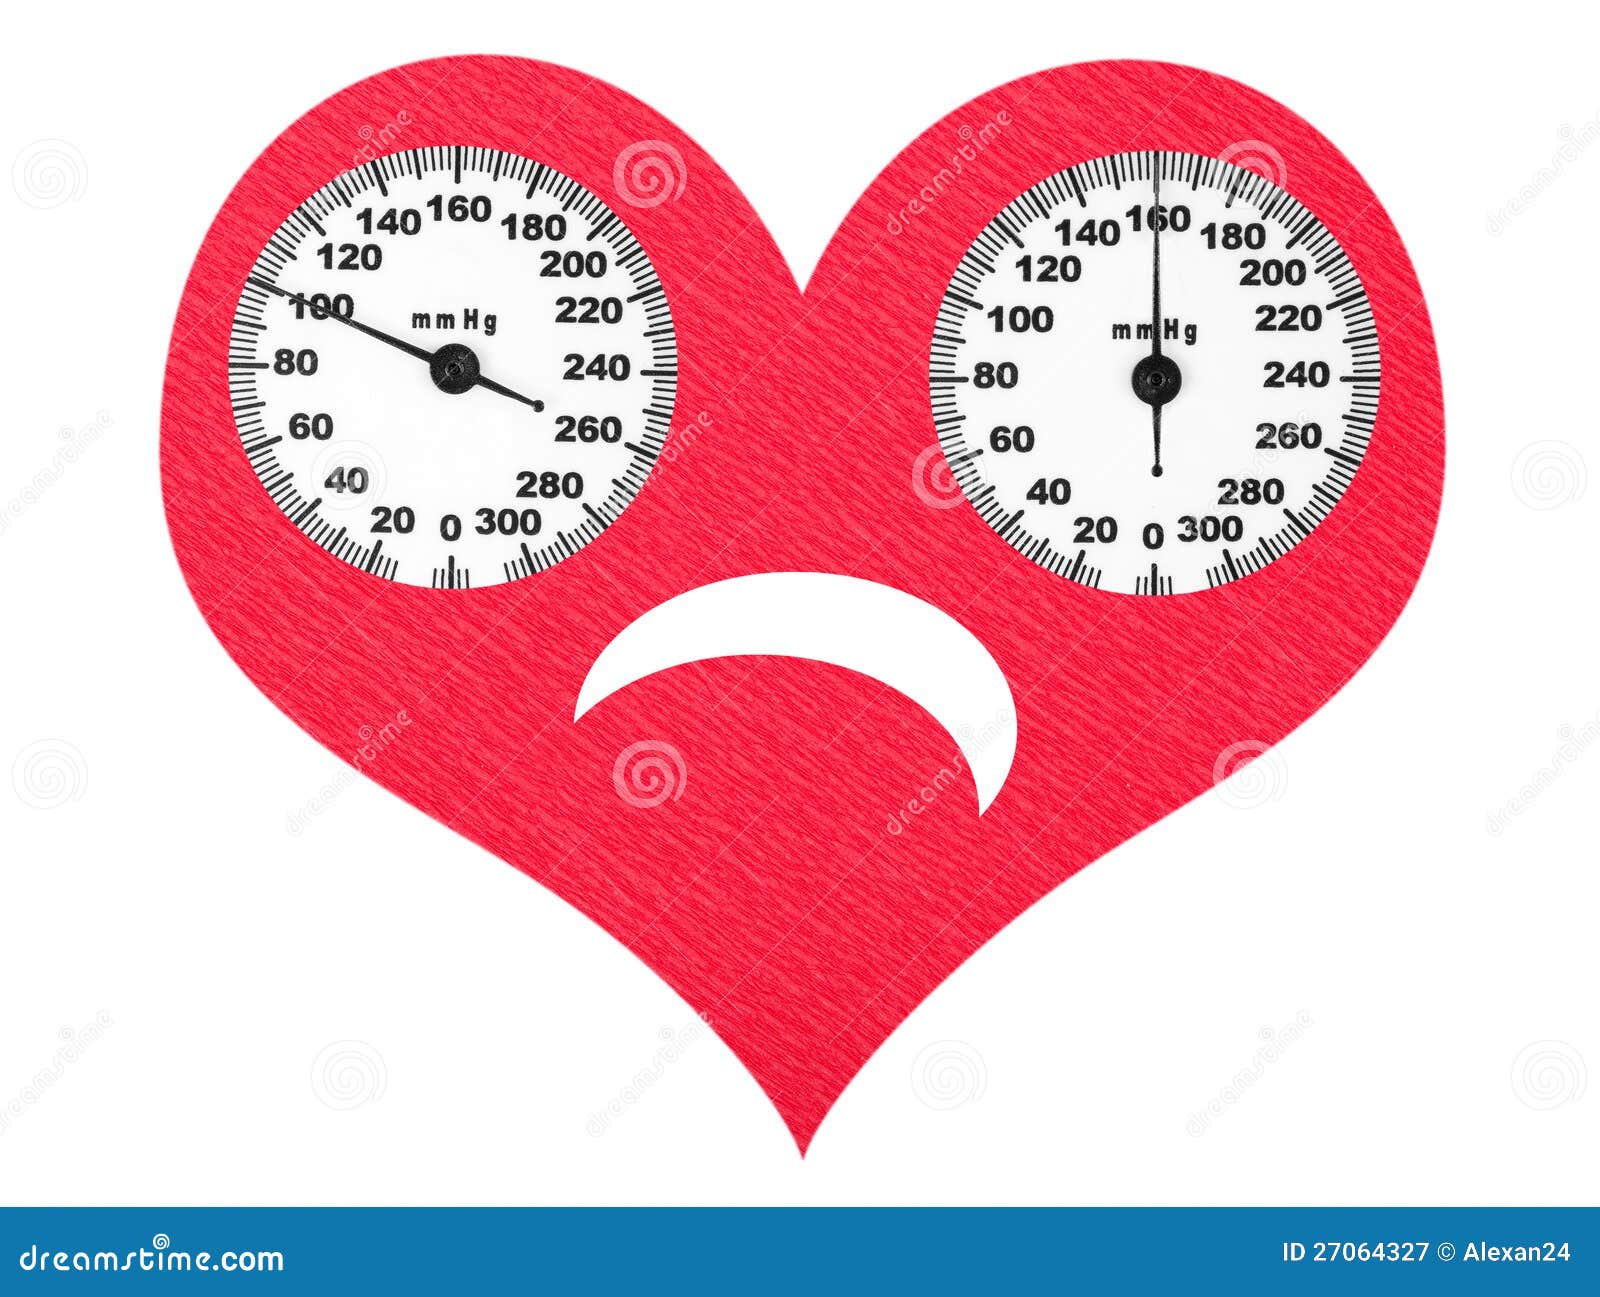 blood pressure chart clipart - photo #31